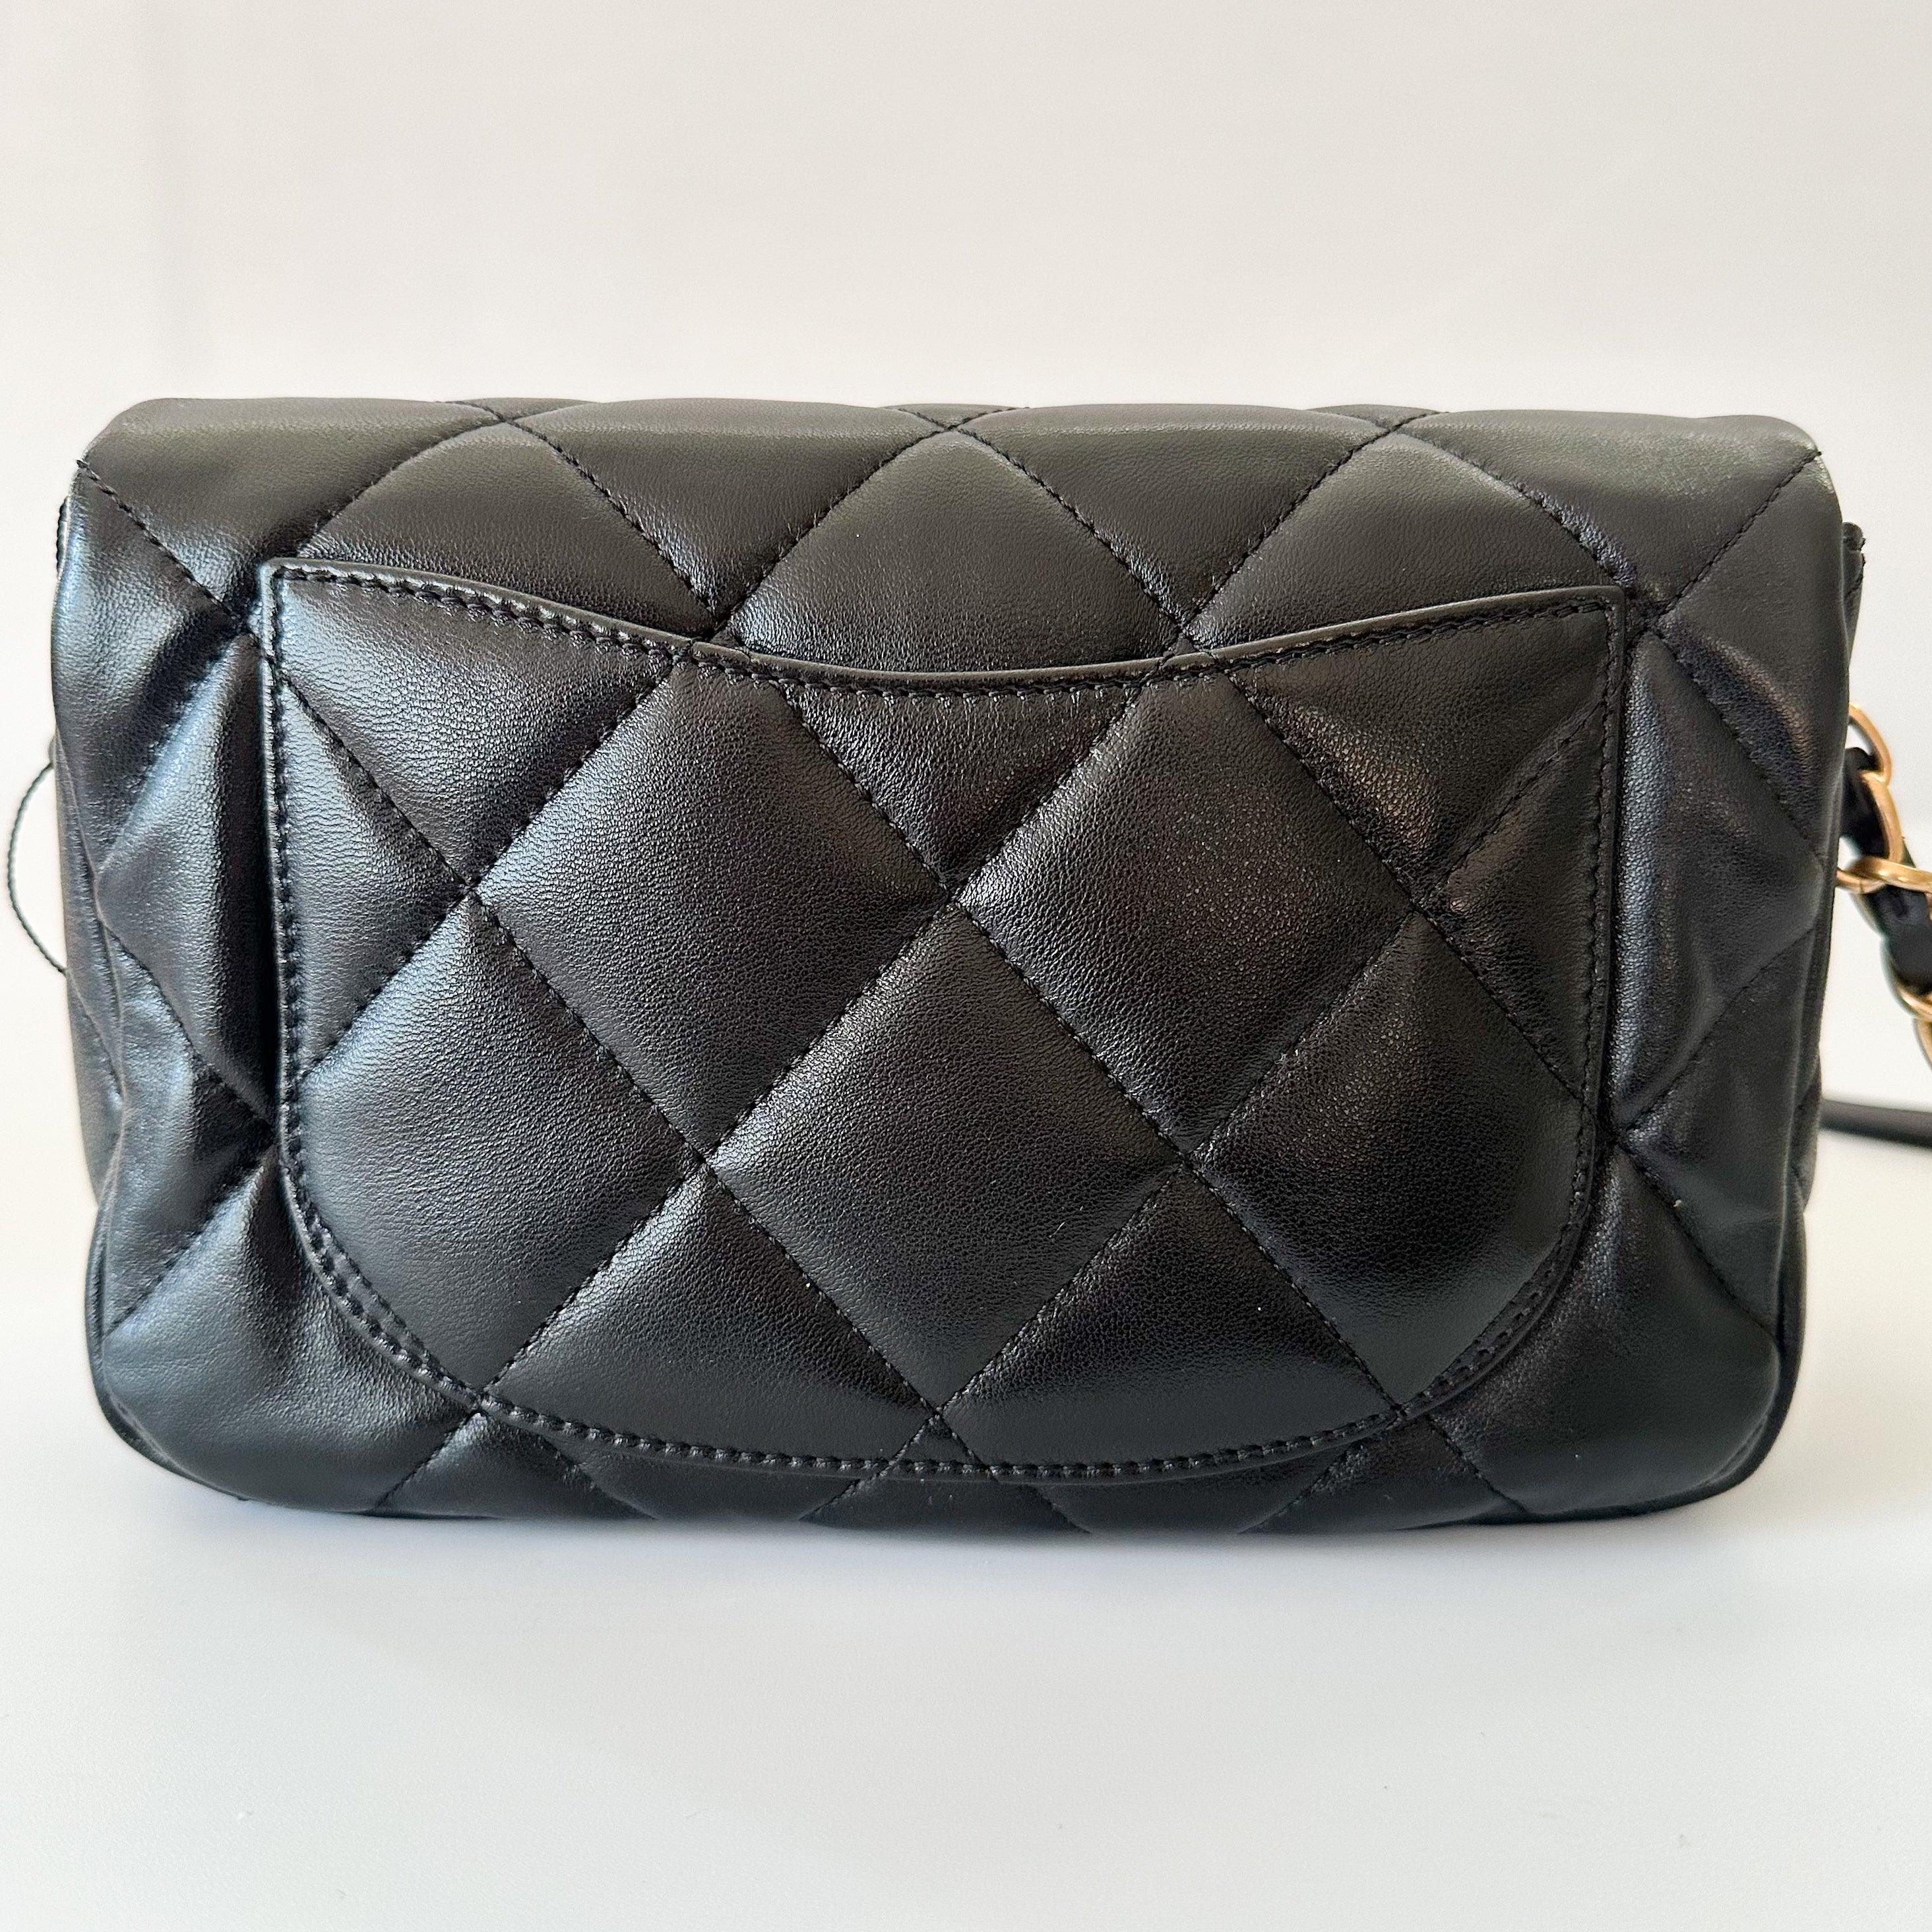 Chanel 23S Small Heart Flap Bag - Hiloresale